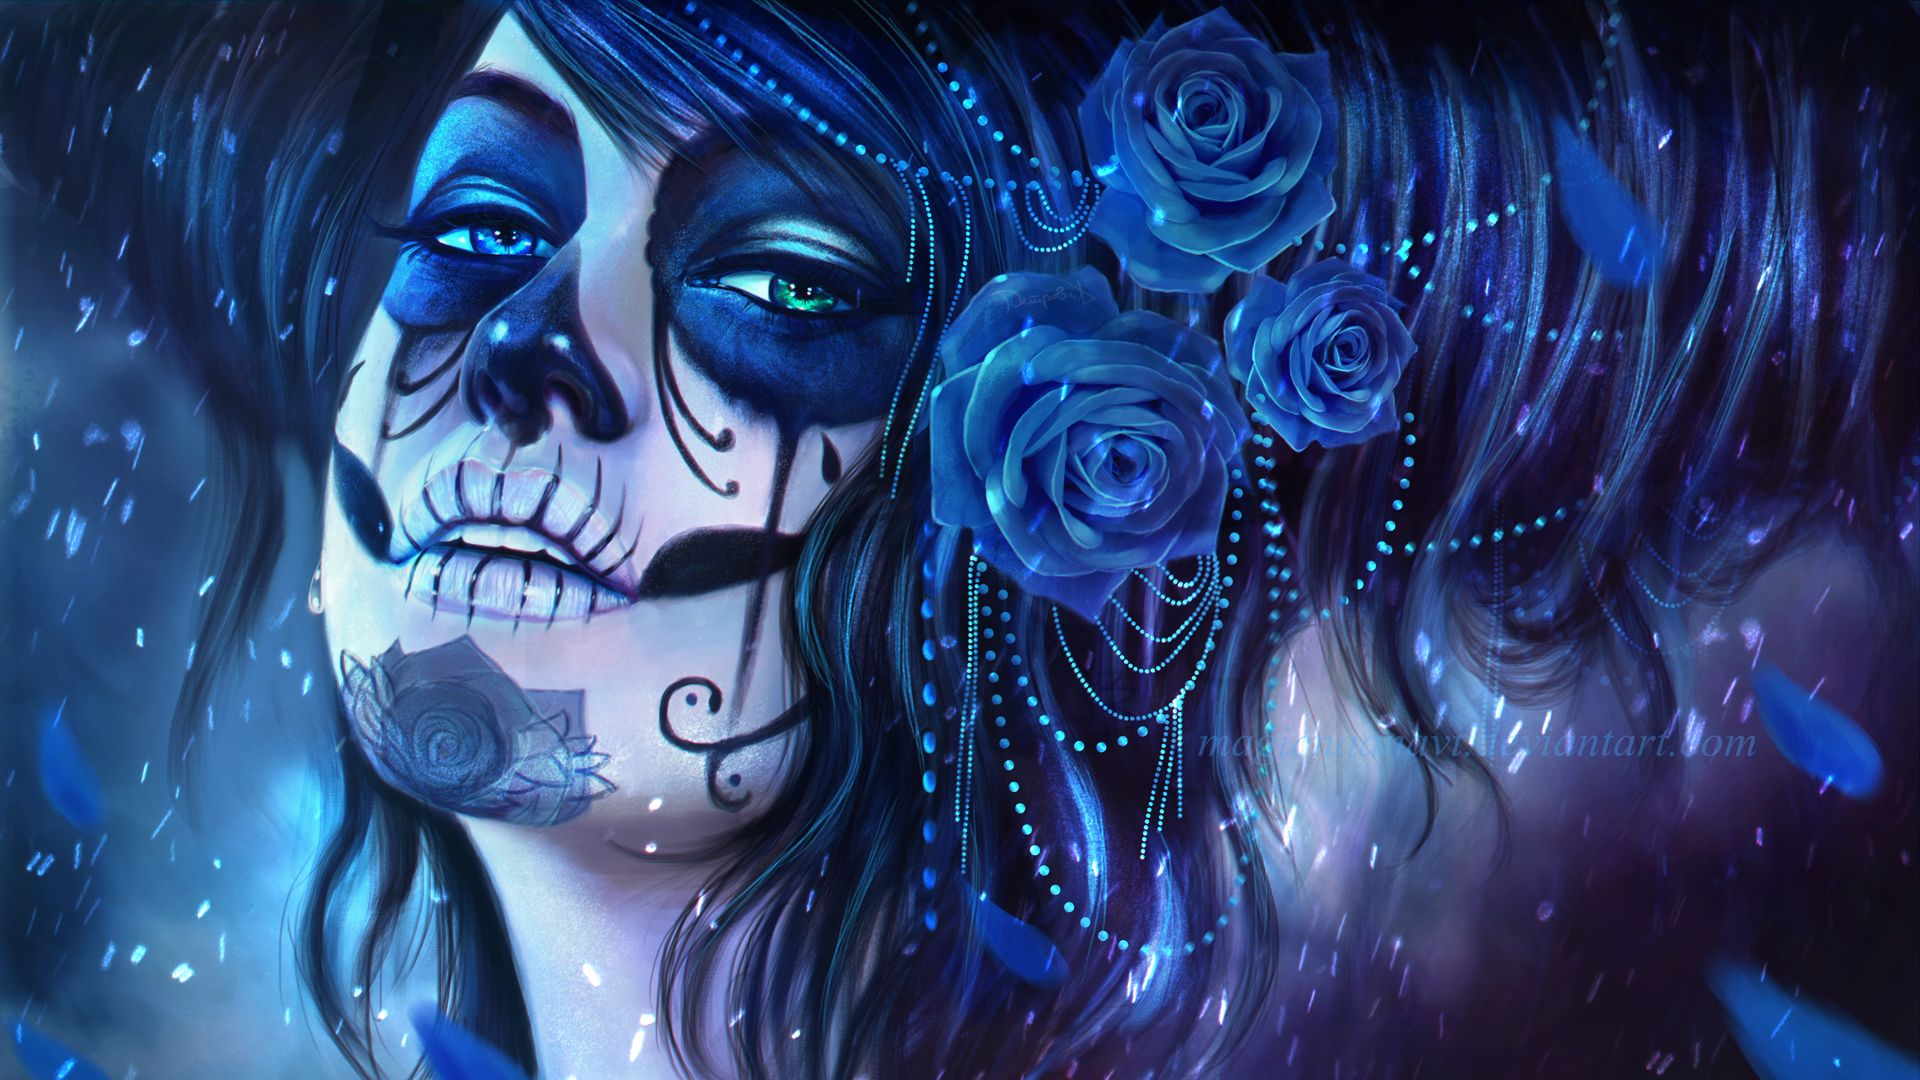 1920x1080 Girl with Dia de Los Muertos Make-Up and Roses Computer Wallpapers, Desktop Backgrounds | | ID:7&acirc;&#128;&brvbar; | Sugar skull girl, Sugar skull artwork, Skull wallpaper